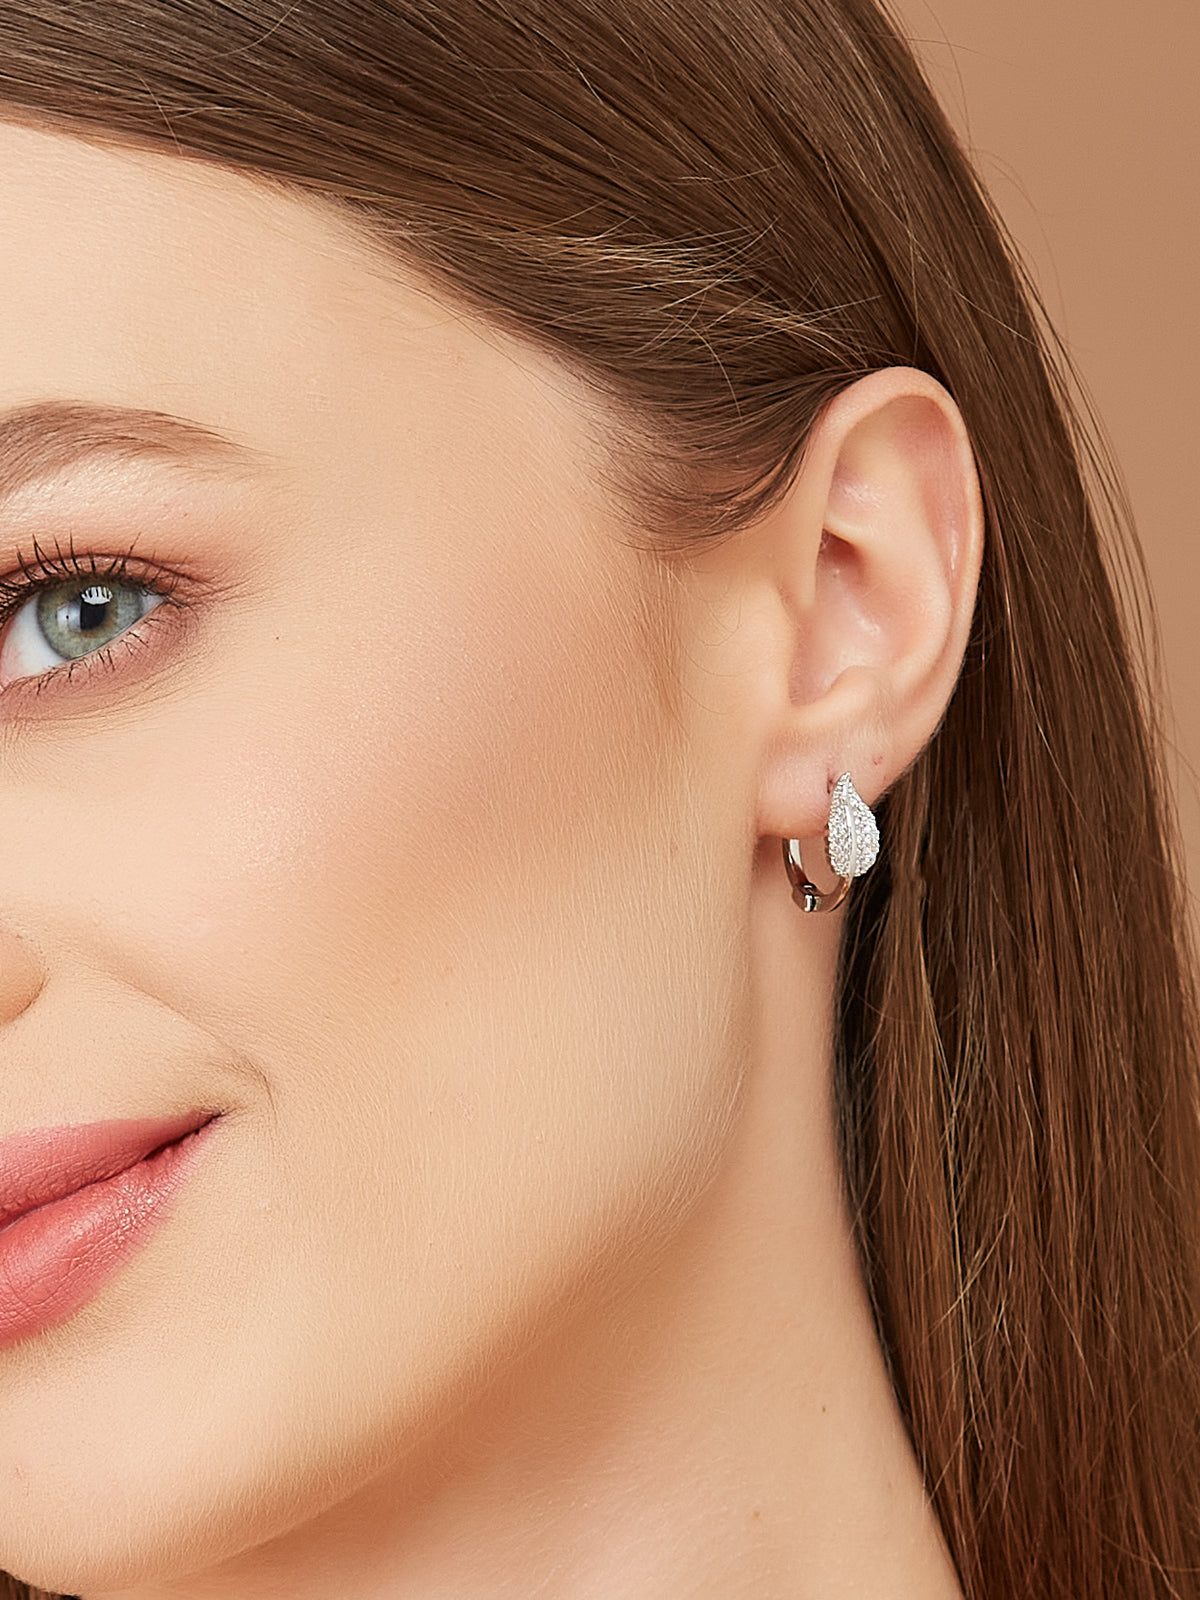 Silver Leave Design Stud earrings for women & girls